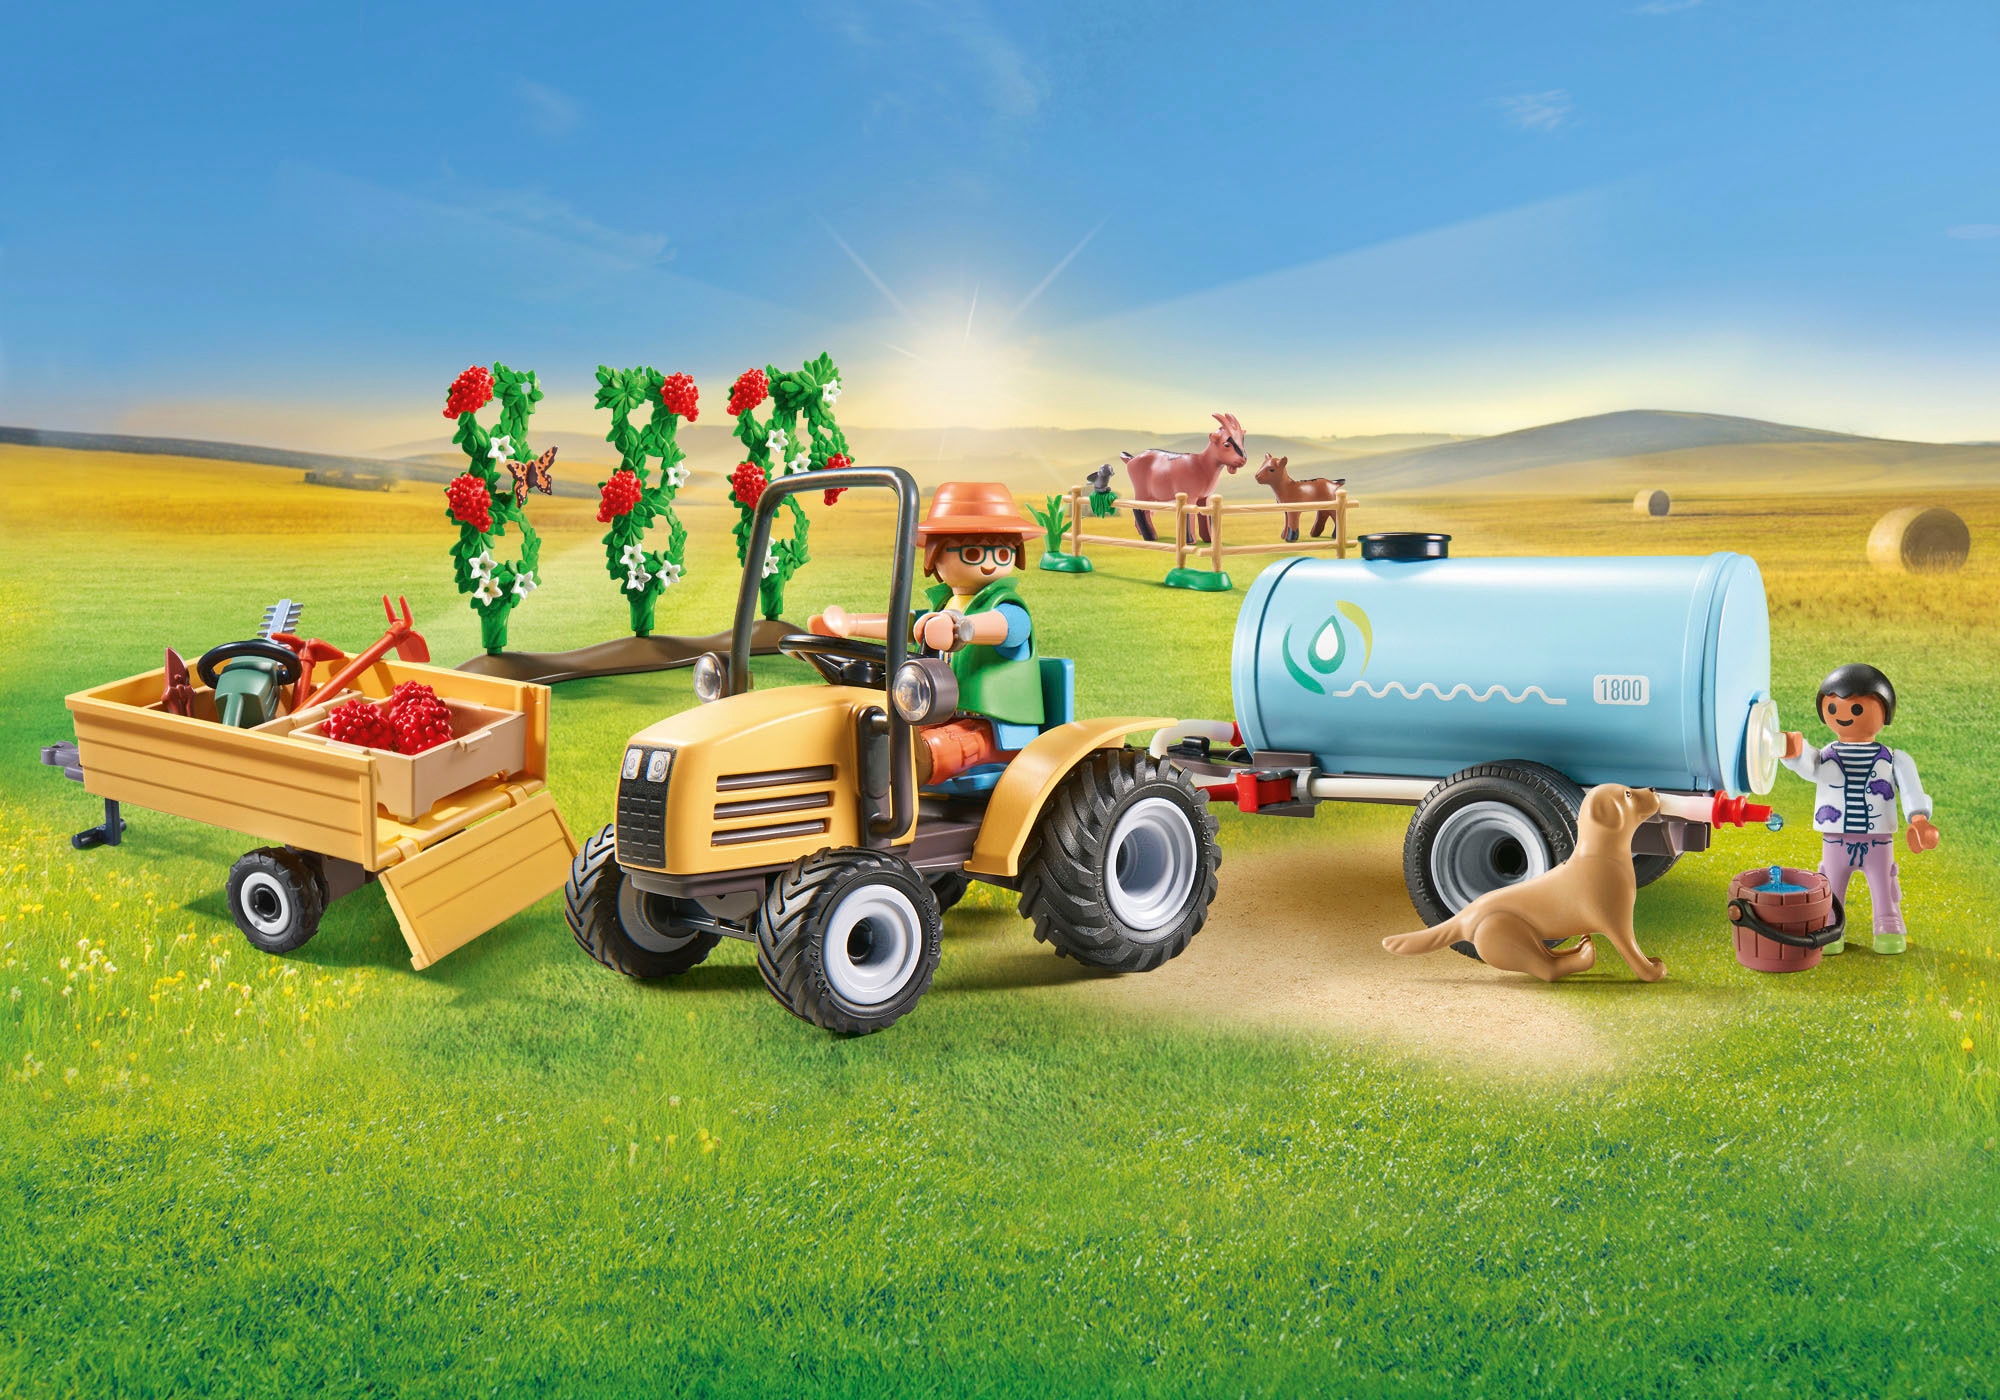 Playmobil® Konstruktions-Spielset »Traktor mit Anhänger und Wassertank (71442), Country«, (117 St.), teilweise aus recyceltem Material; Made in Germany